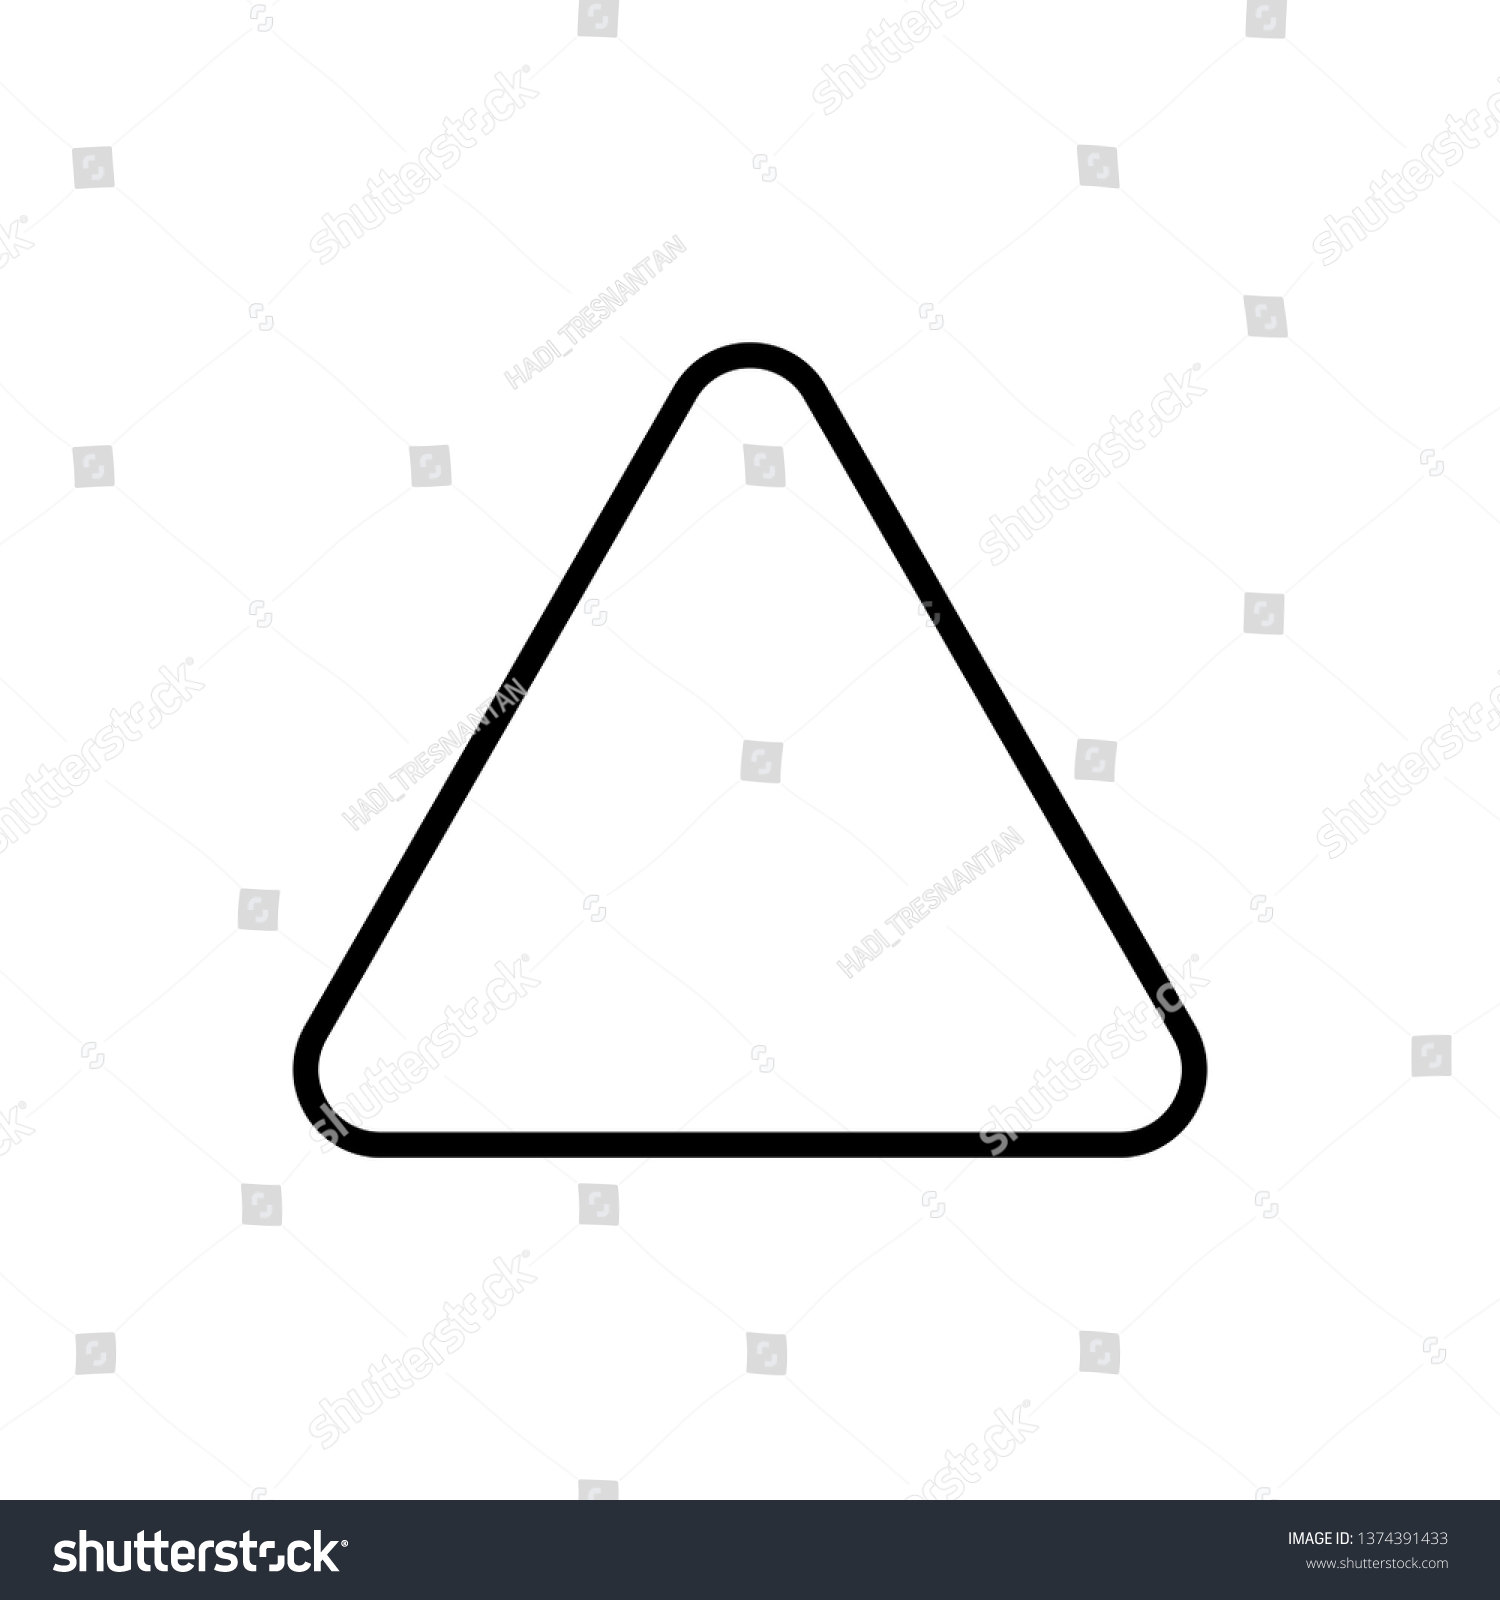 https://image.shutterstock.com/z/stock-vector-triangle-icon-shape-illustration-as-a-simple-vector-sign-trendy-symbol-for-design-websites-1374391433.jpg